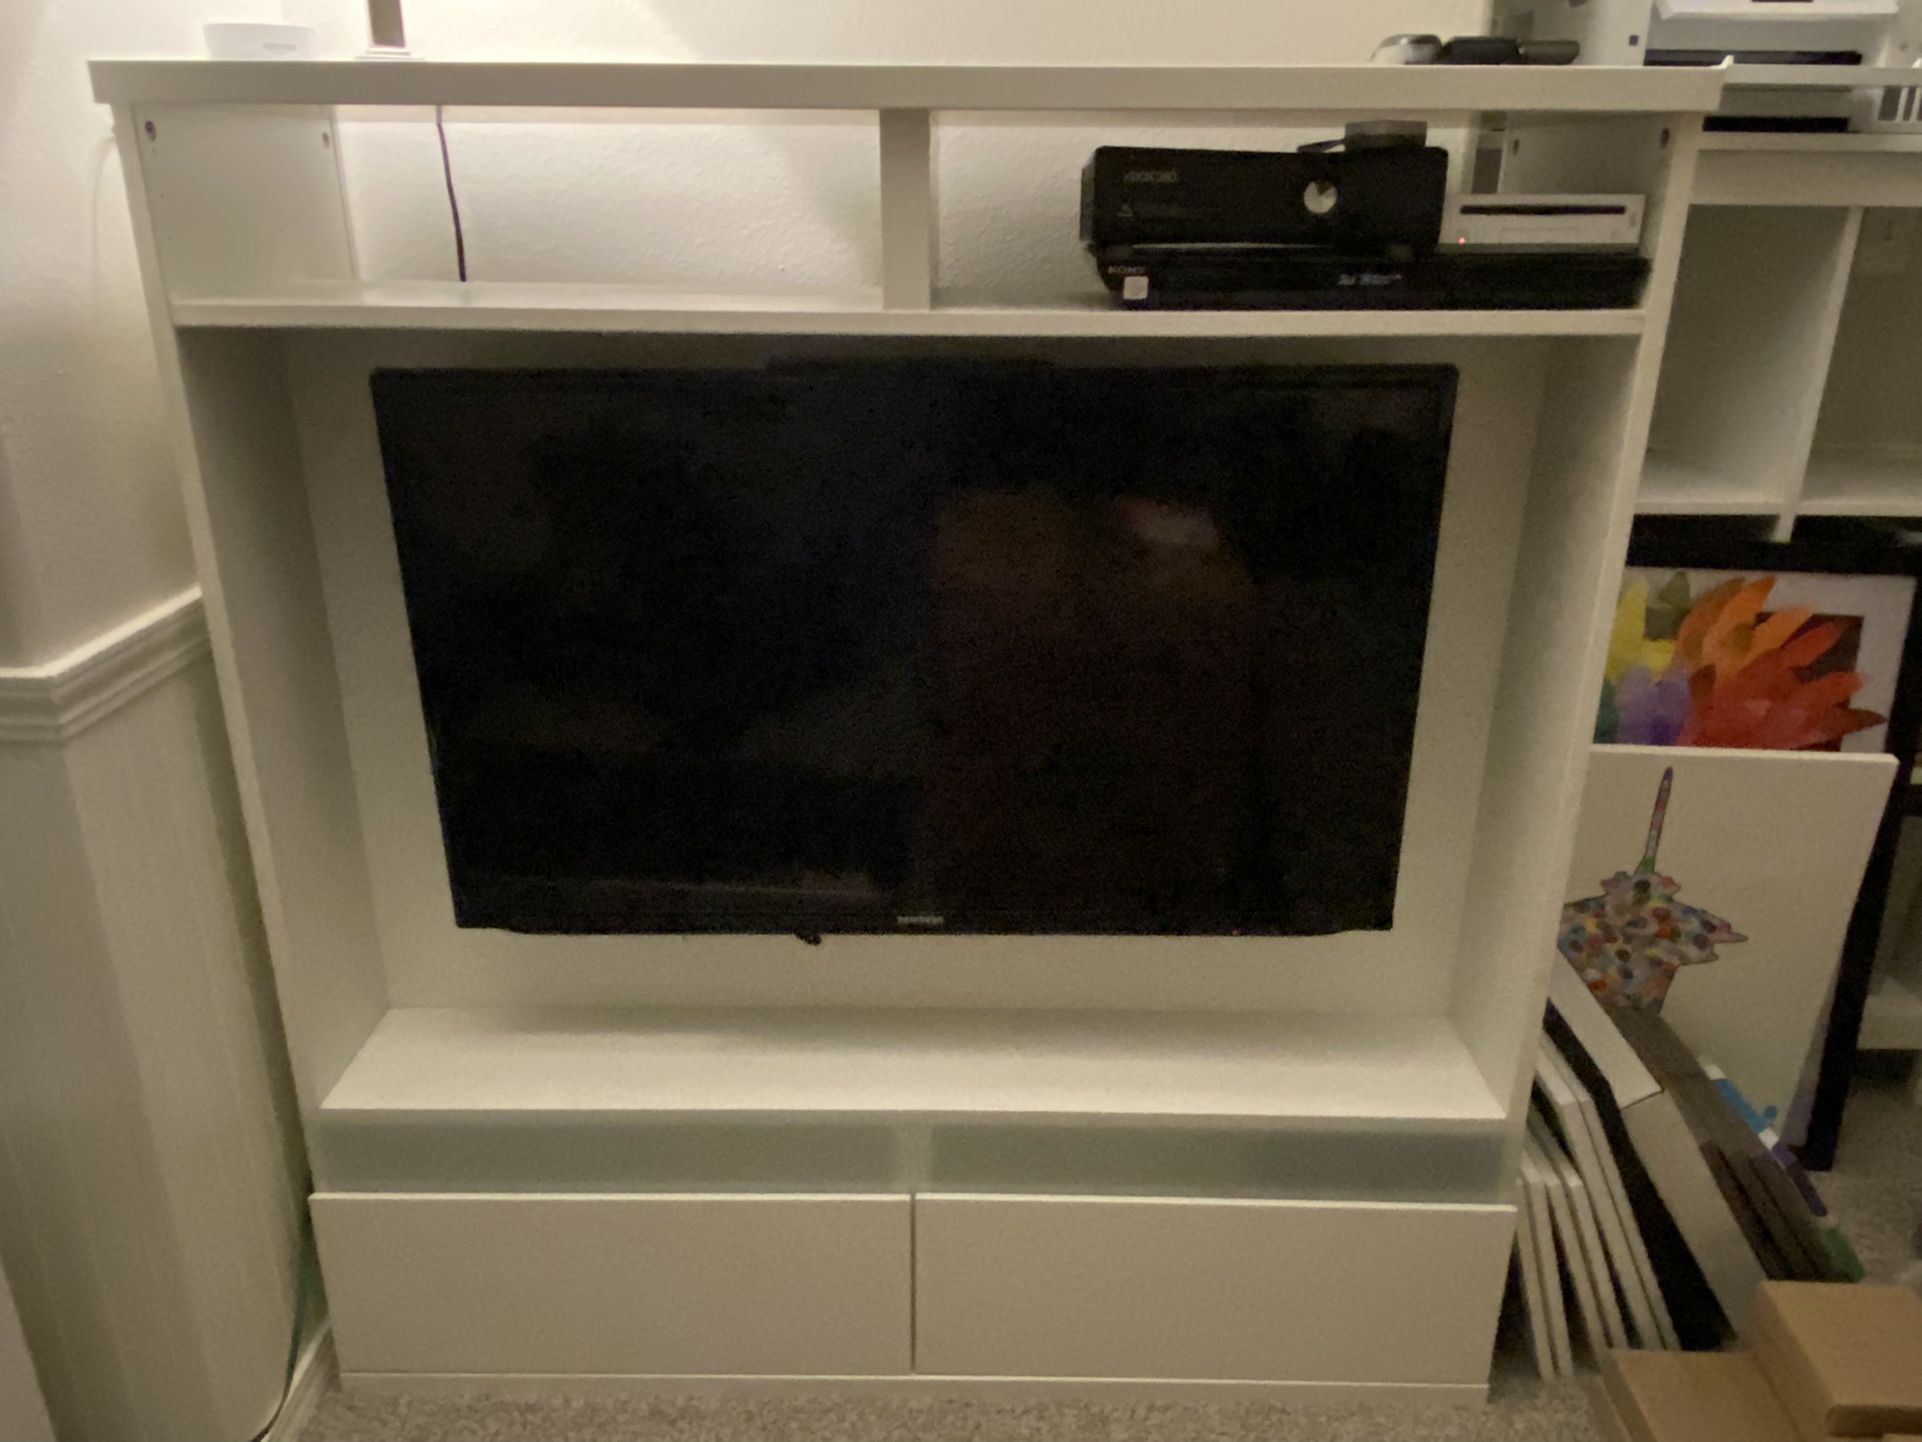 Samsung 40” Smart TV, Mount, & IKEA Wall Media Unit